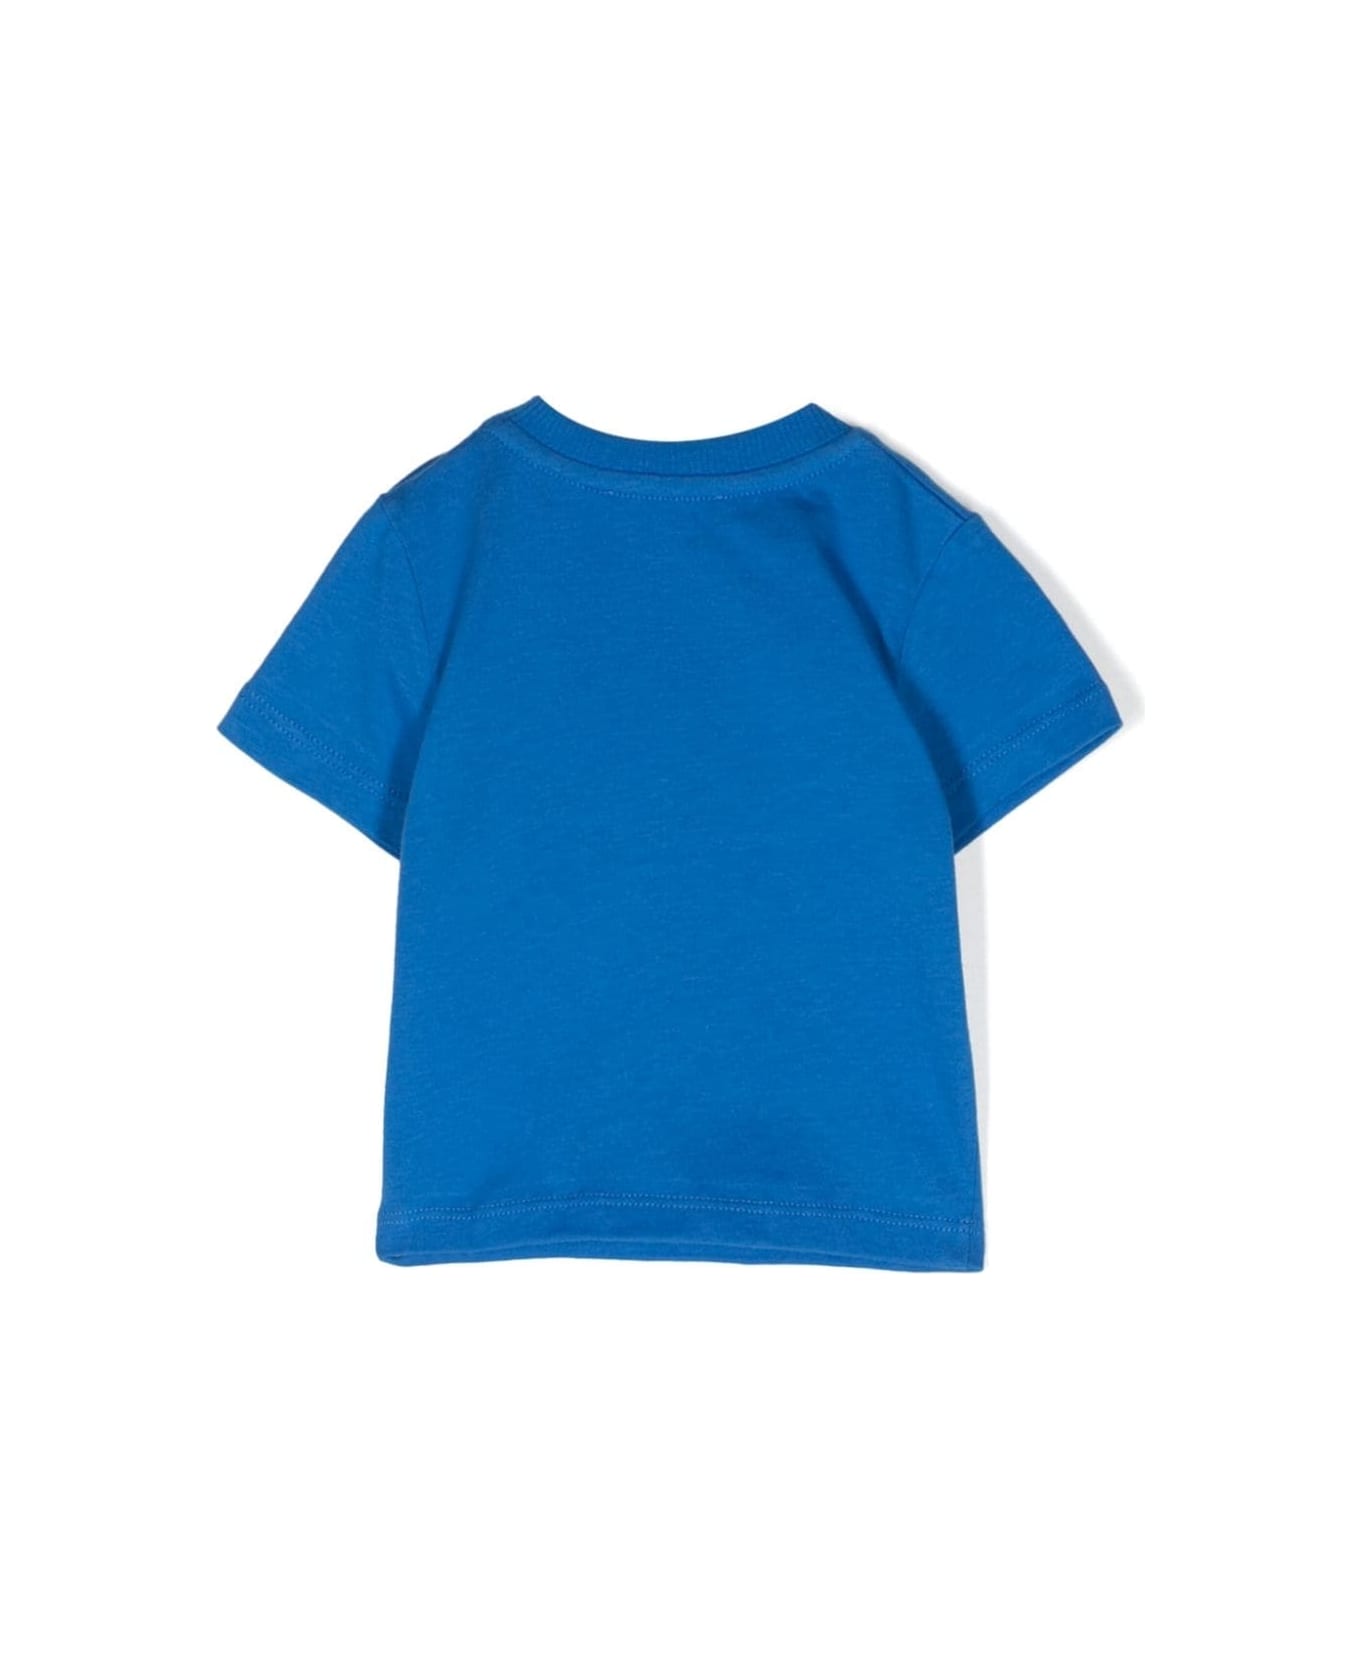 Moschino T-shirt Con Logo - Blue